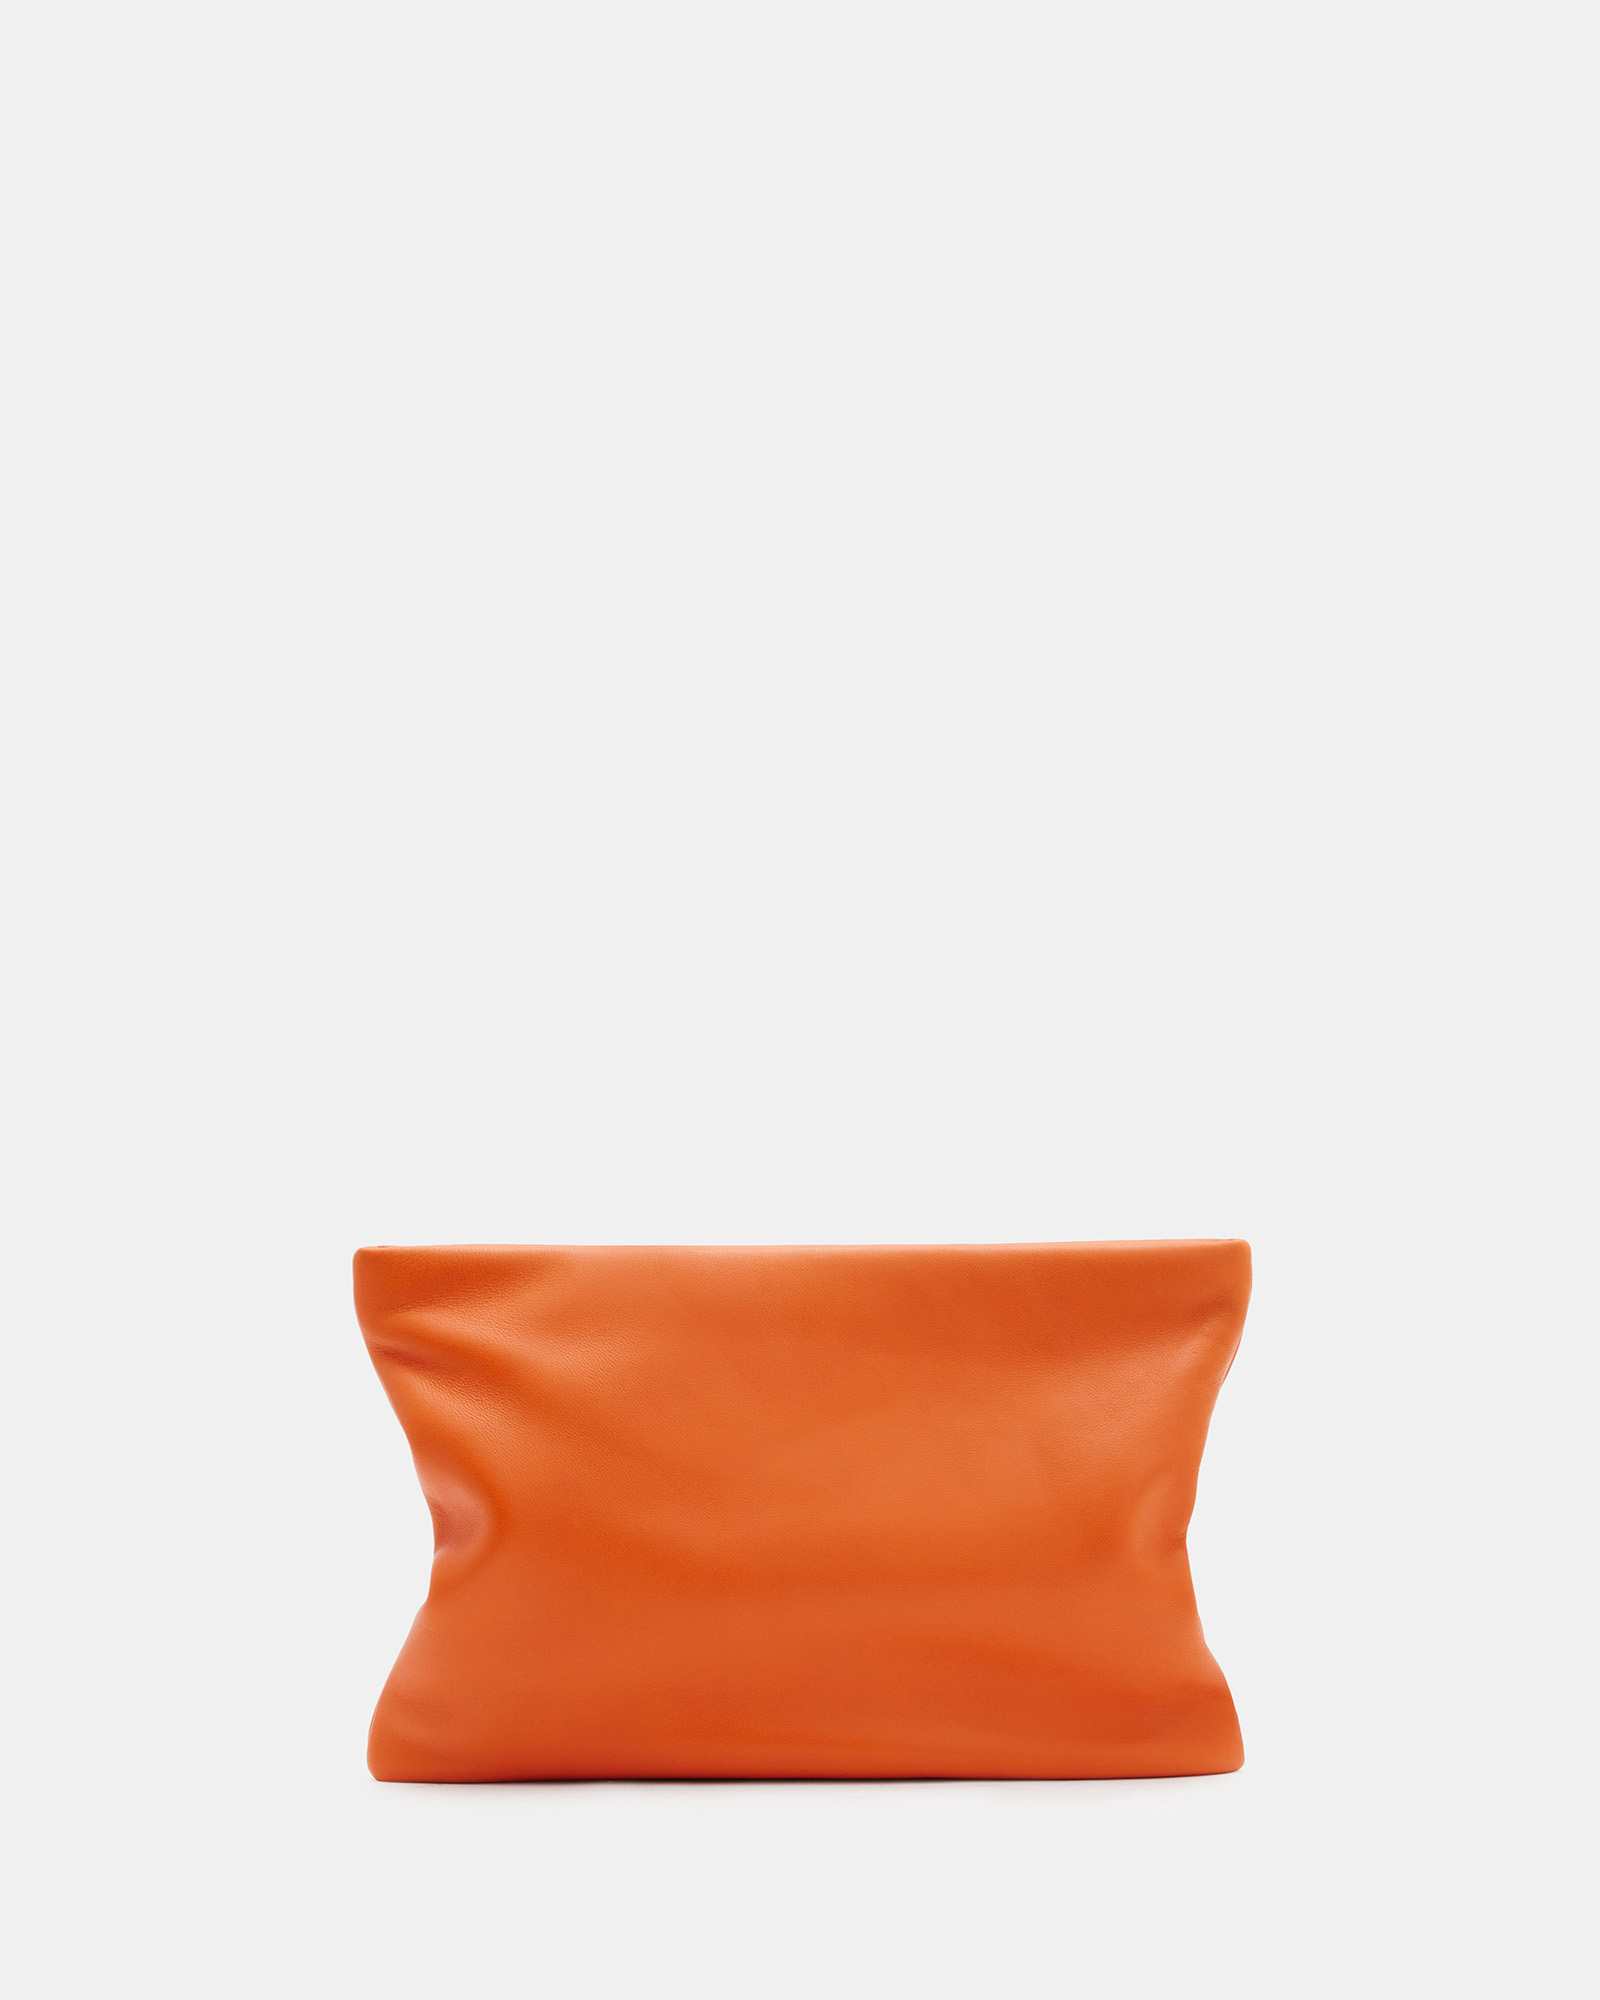 AllSaints Bettina Leather Clutch Bag,, PYROLE ORANGE